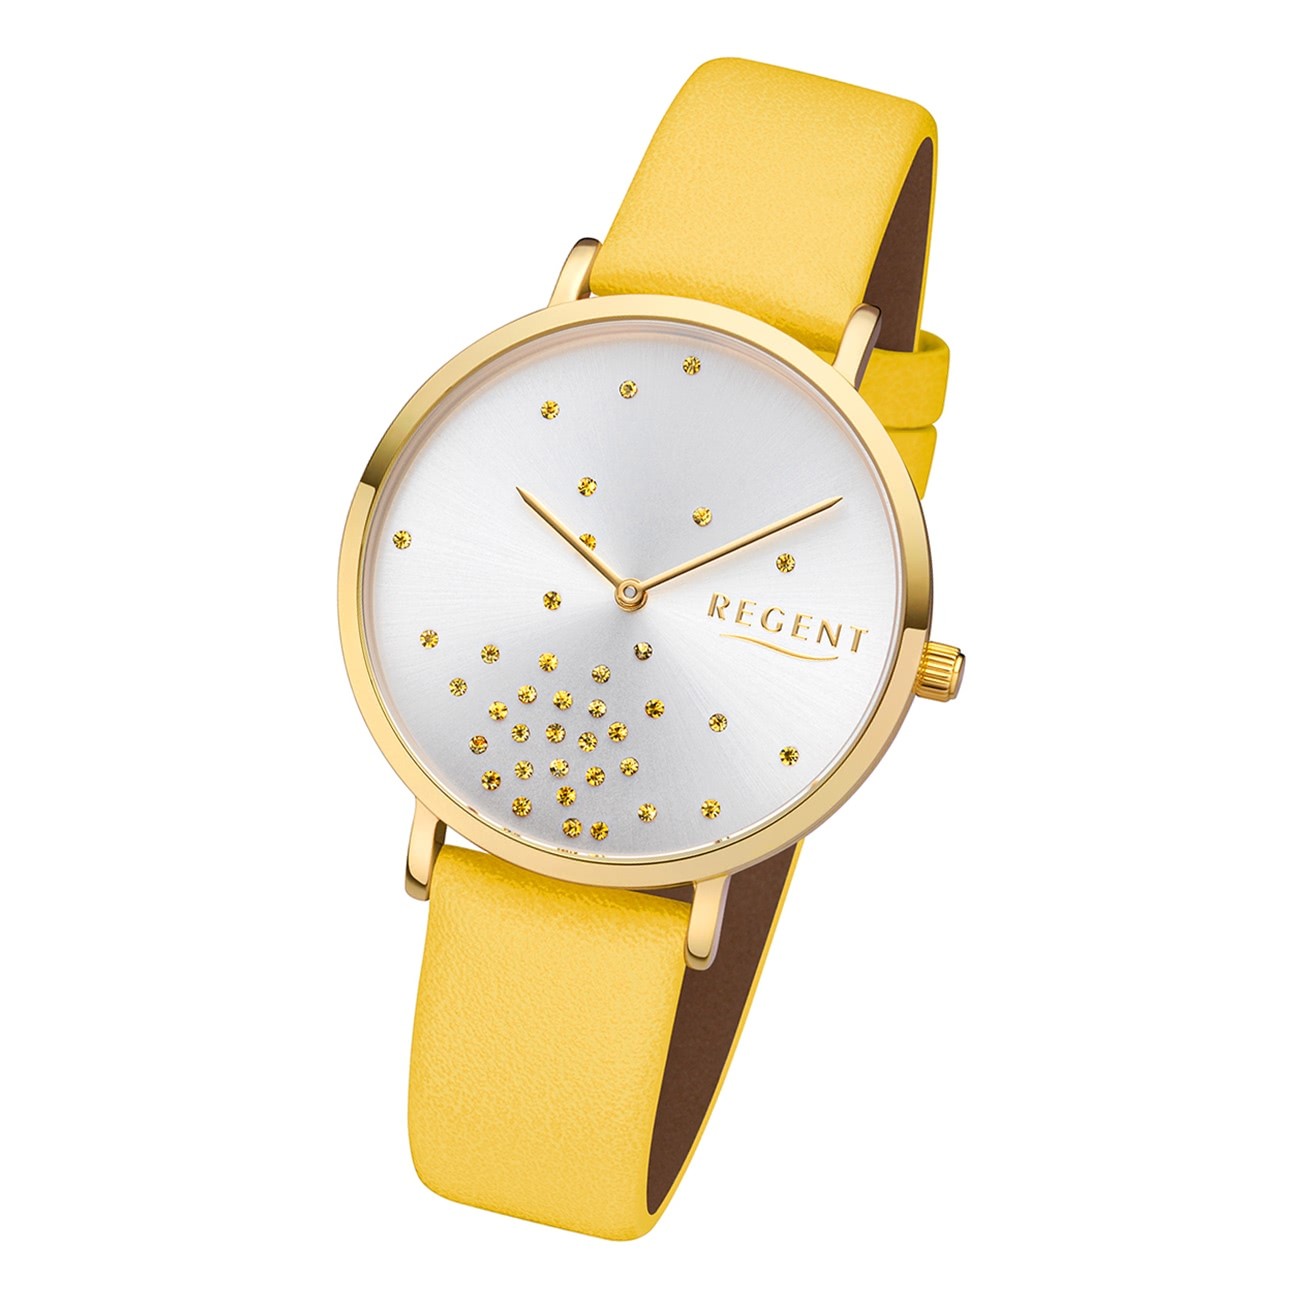 Regent Damen Armbanduhr gelb Analog Leder URBA600 Quarz-Uhr BA-600